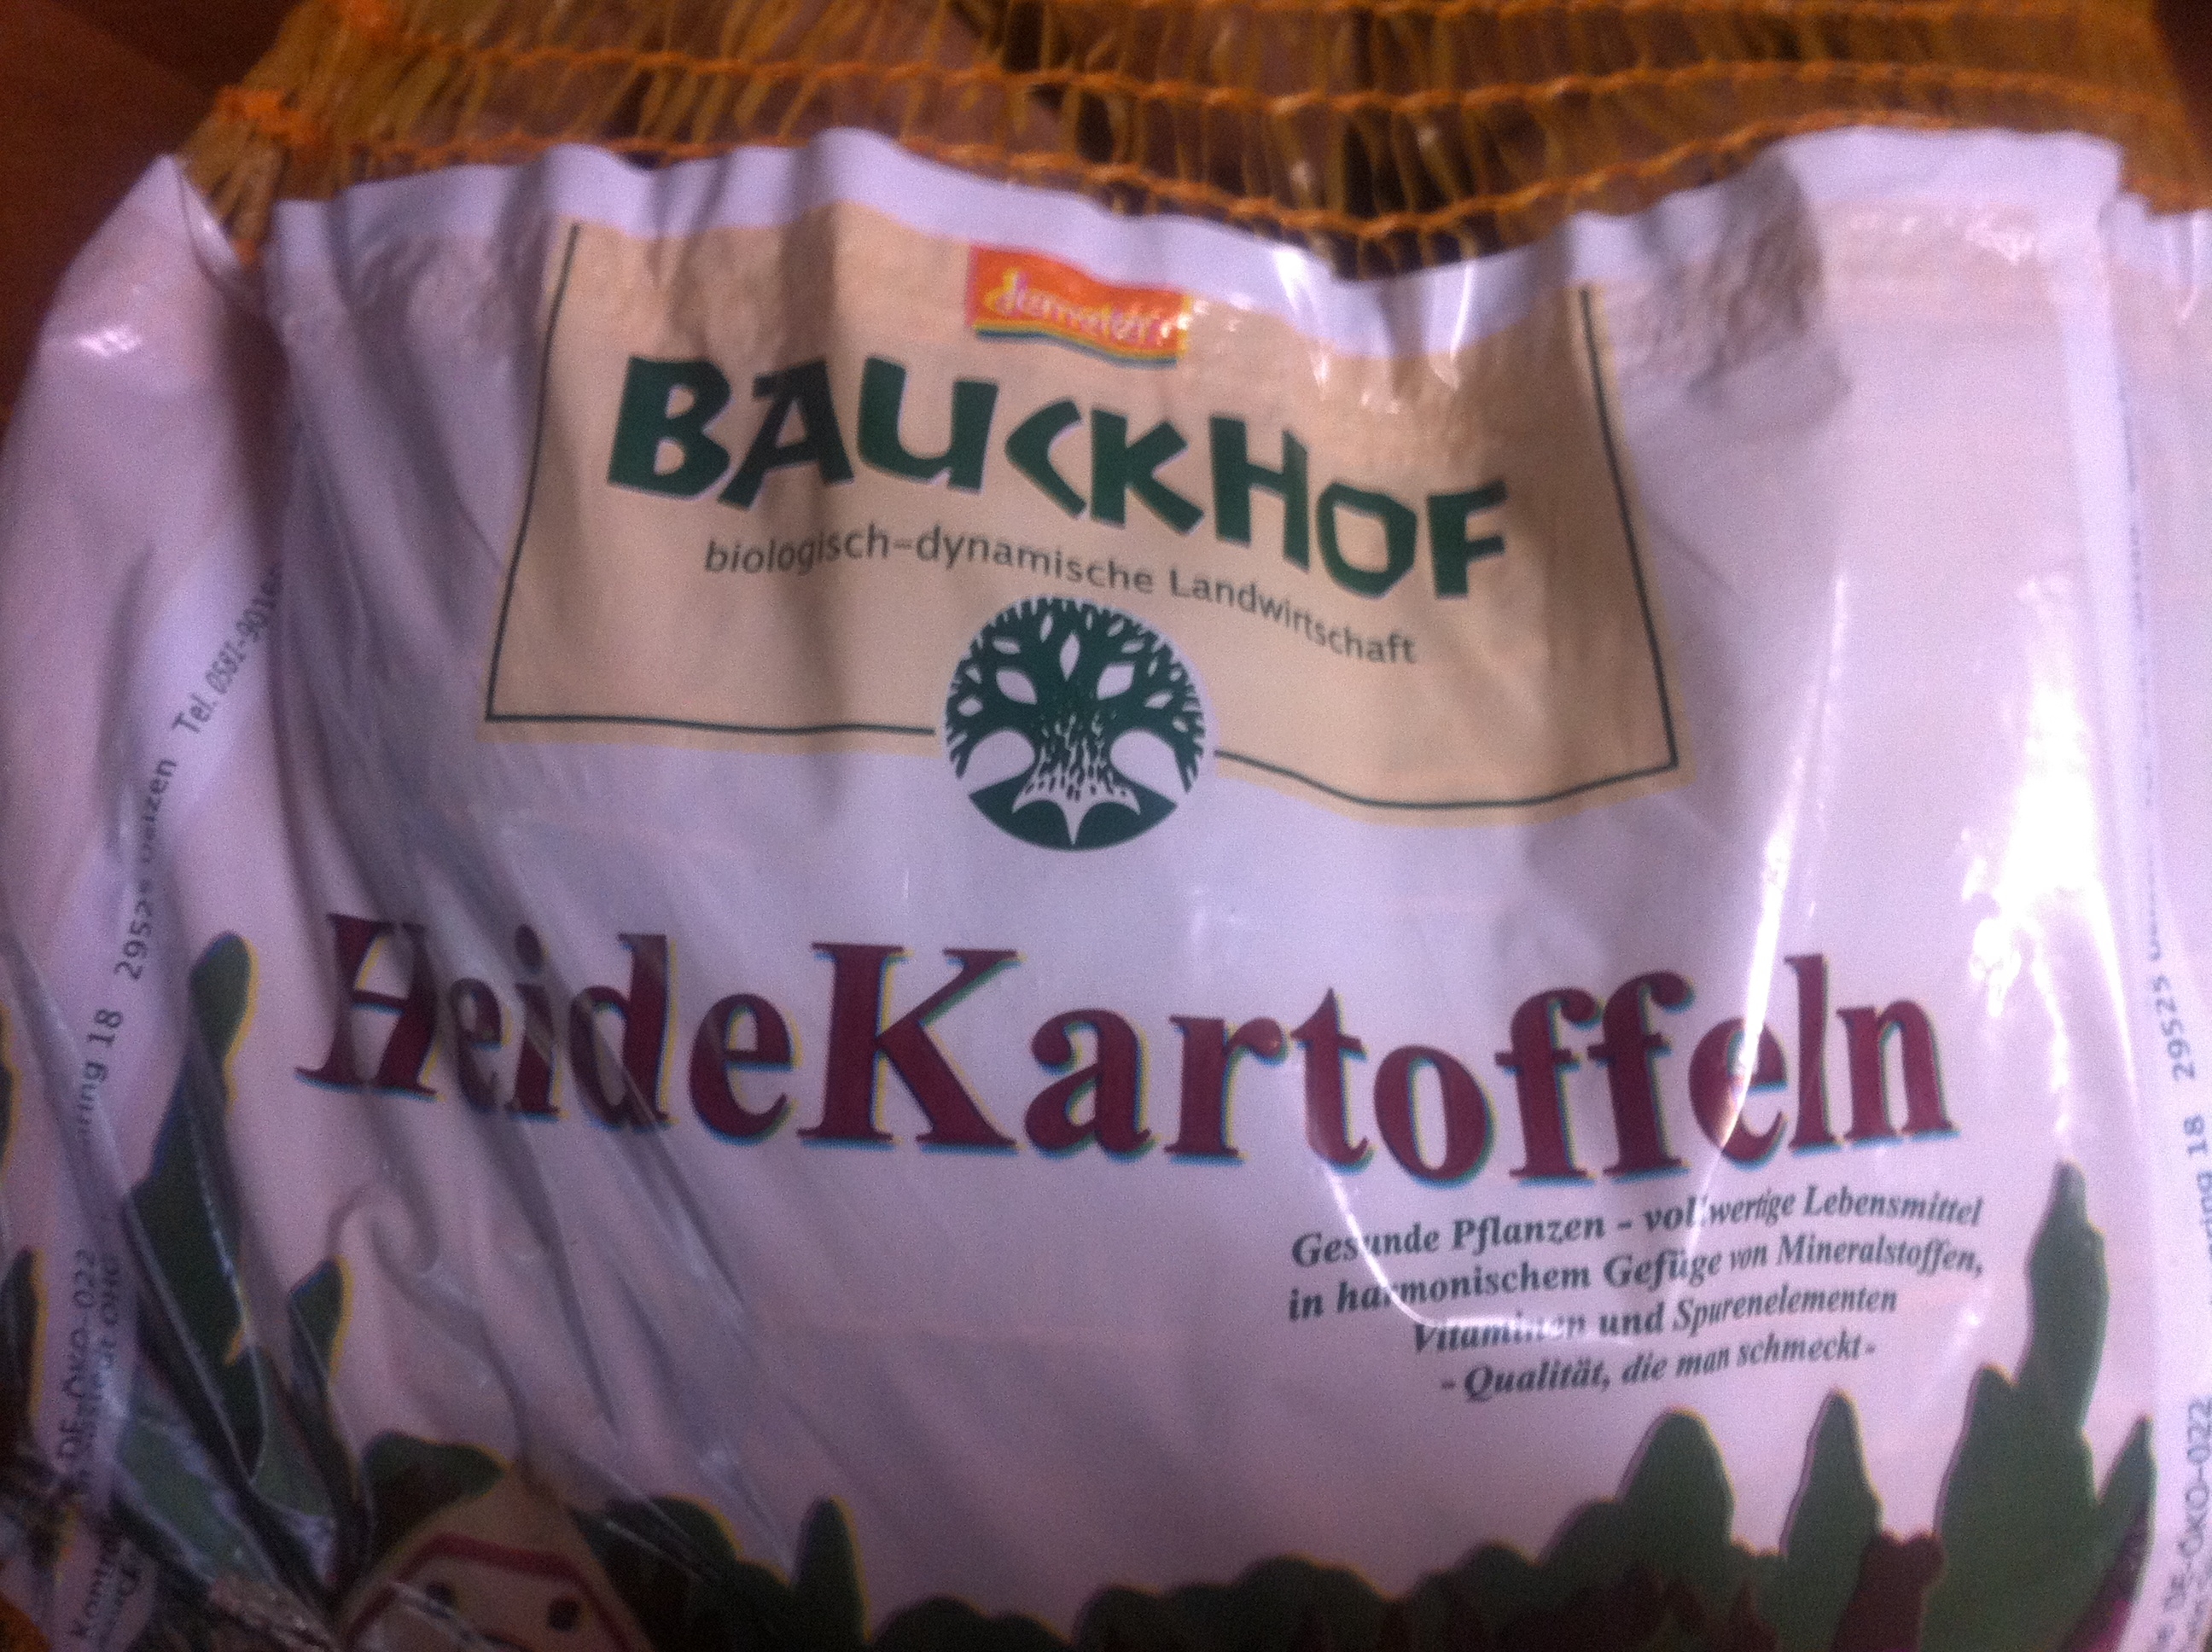 Heidekartoffeln Linda  vom Bauckhof